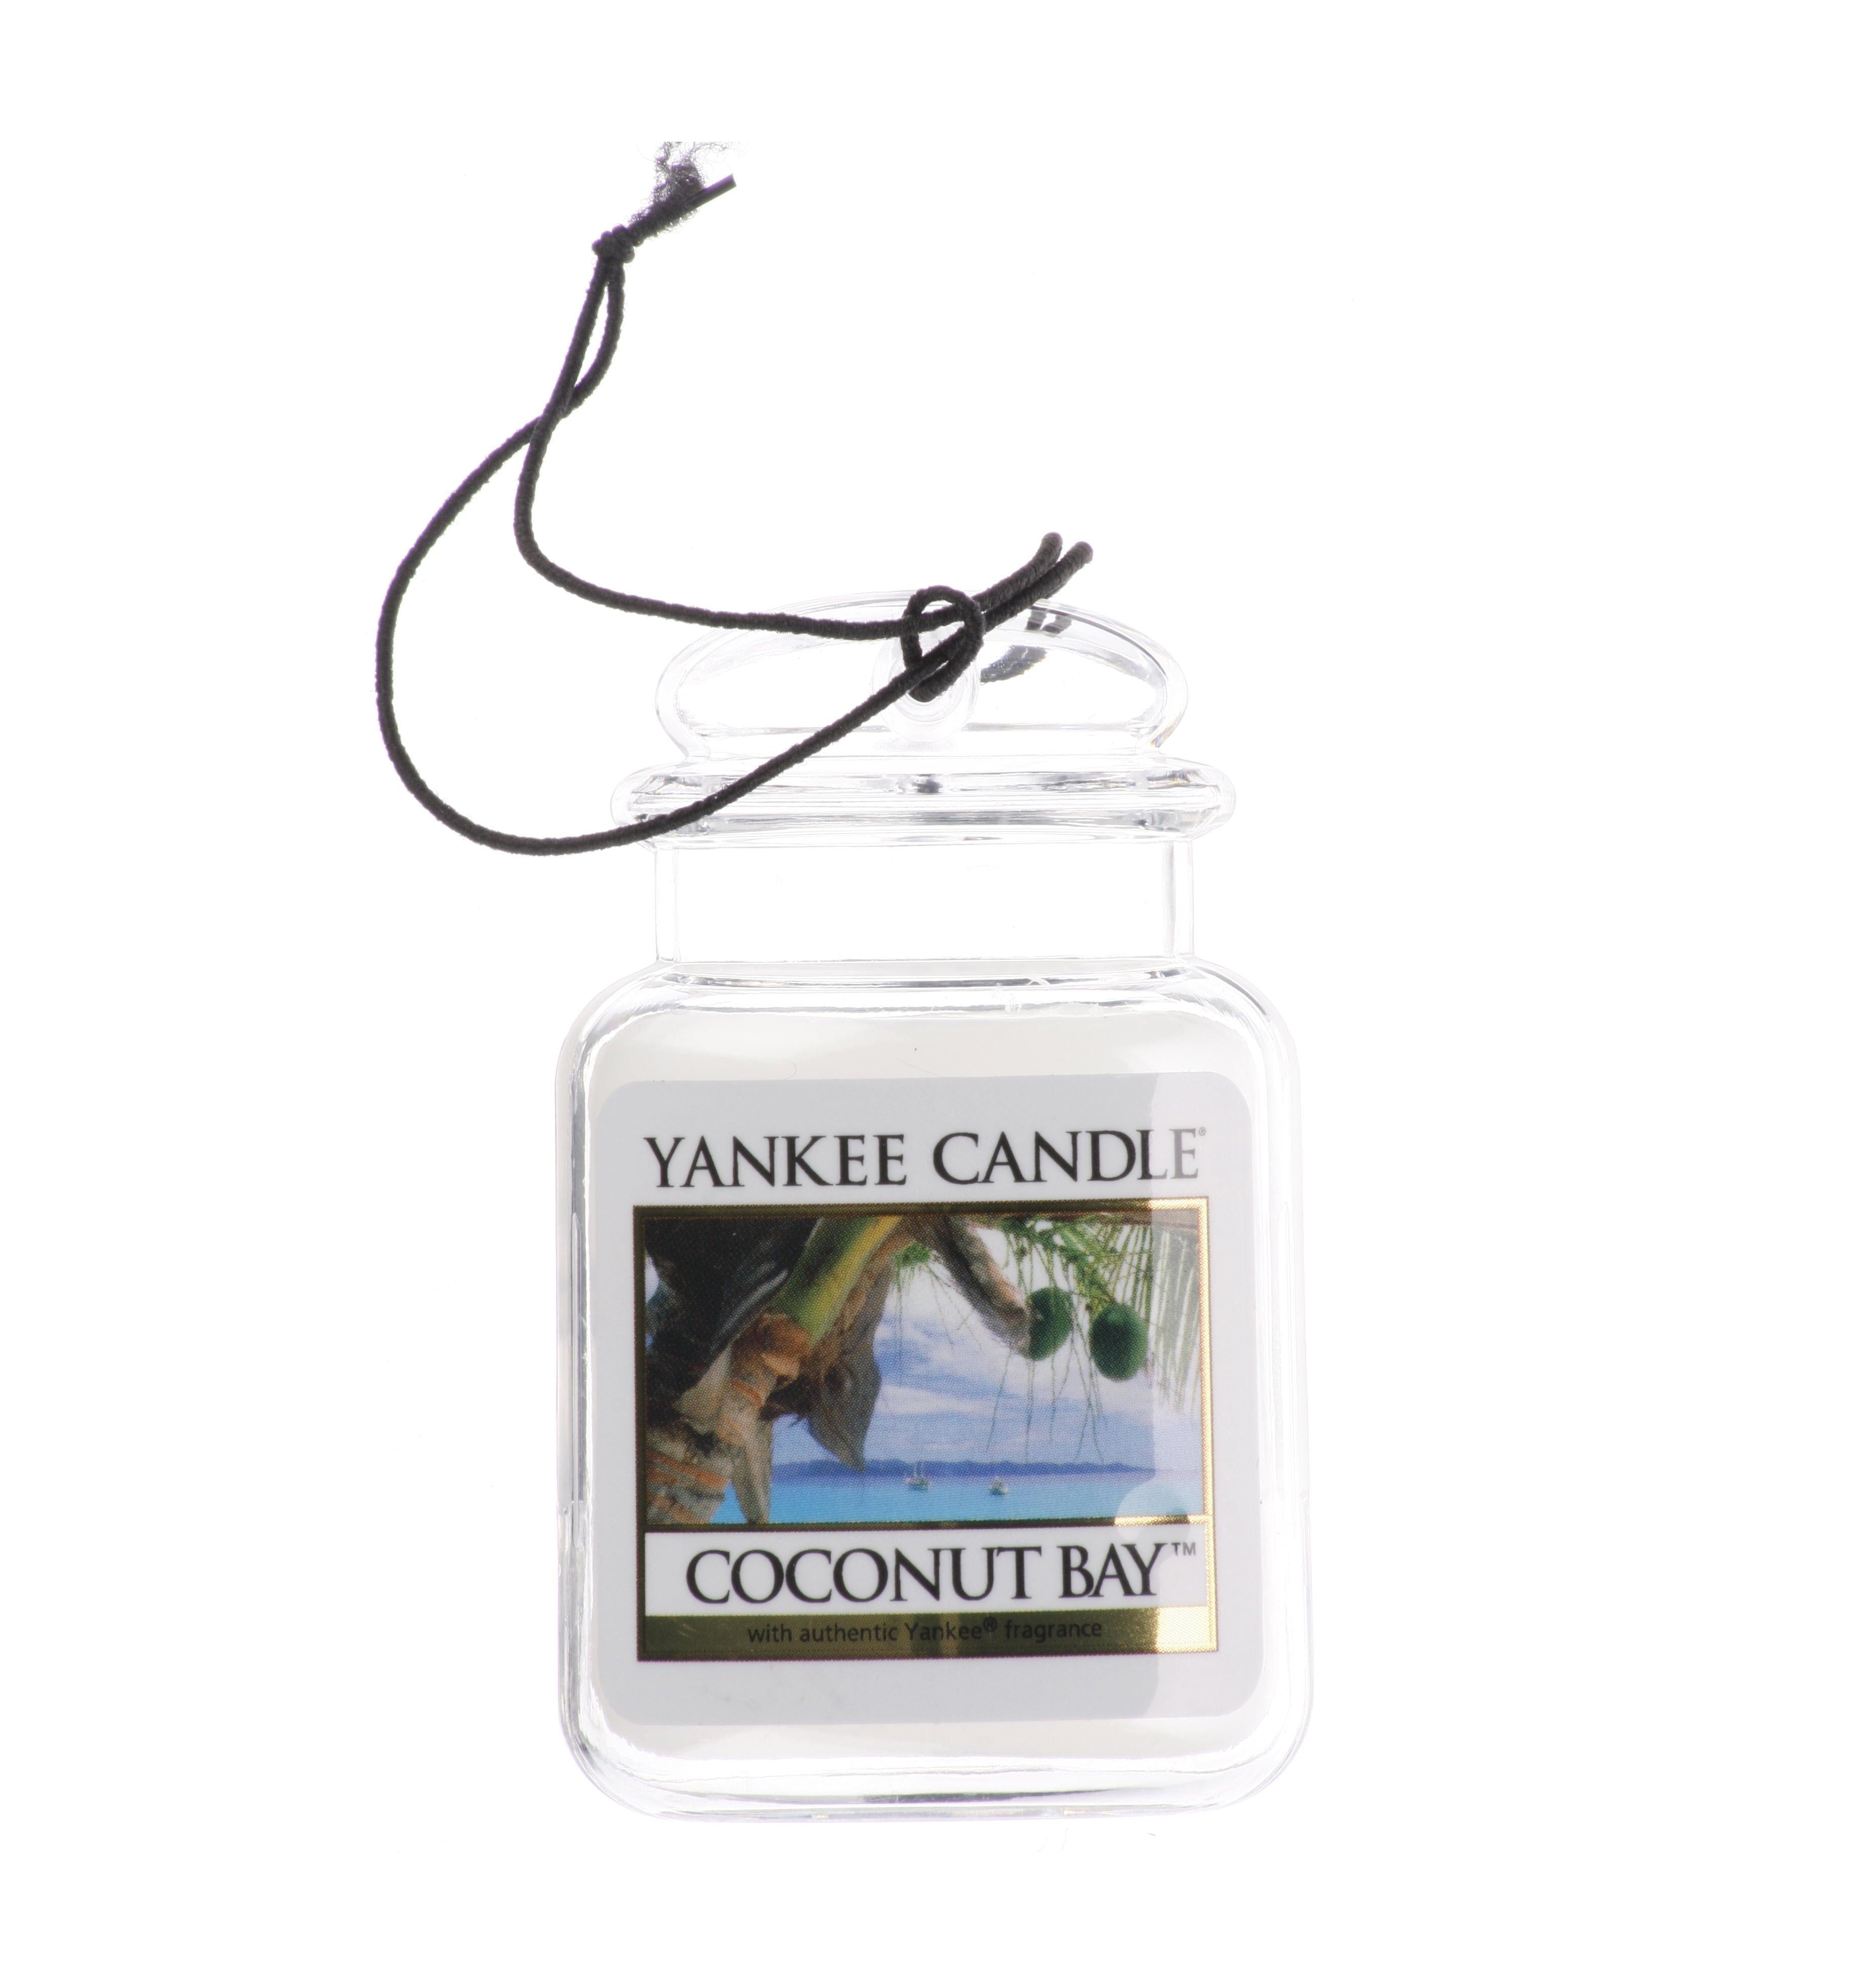 COCONUT BAY -Yankee Candle- Car Jar Ultimate